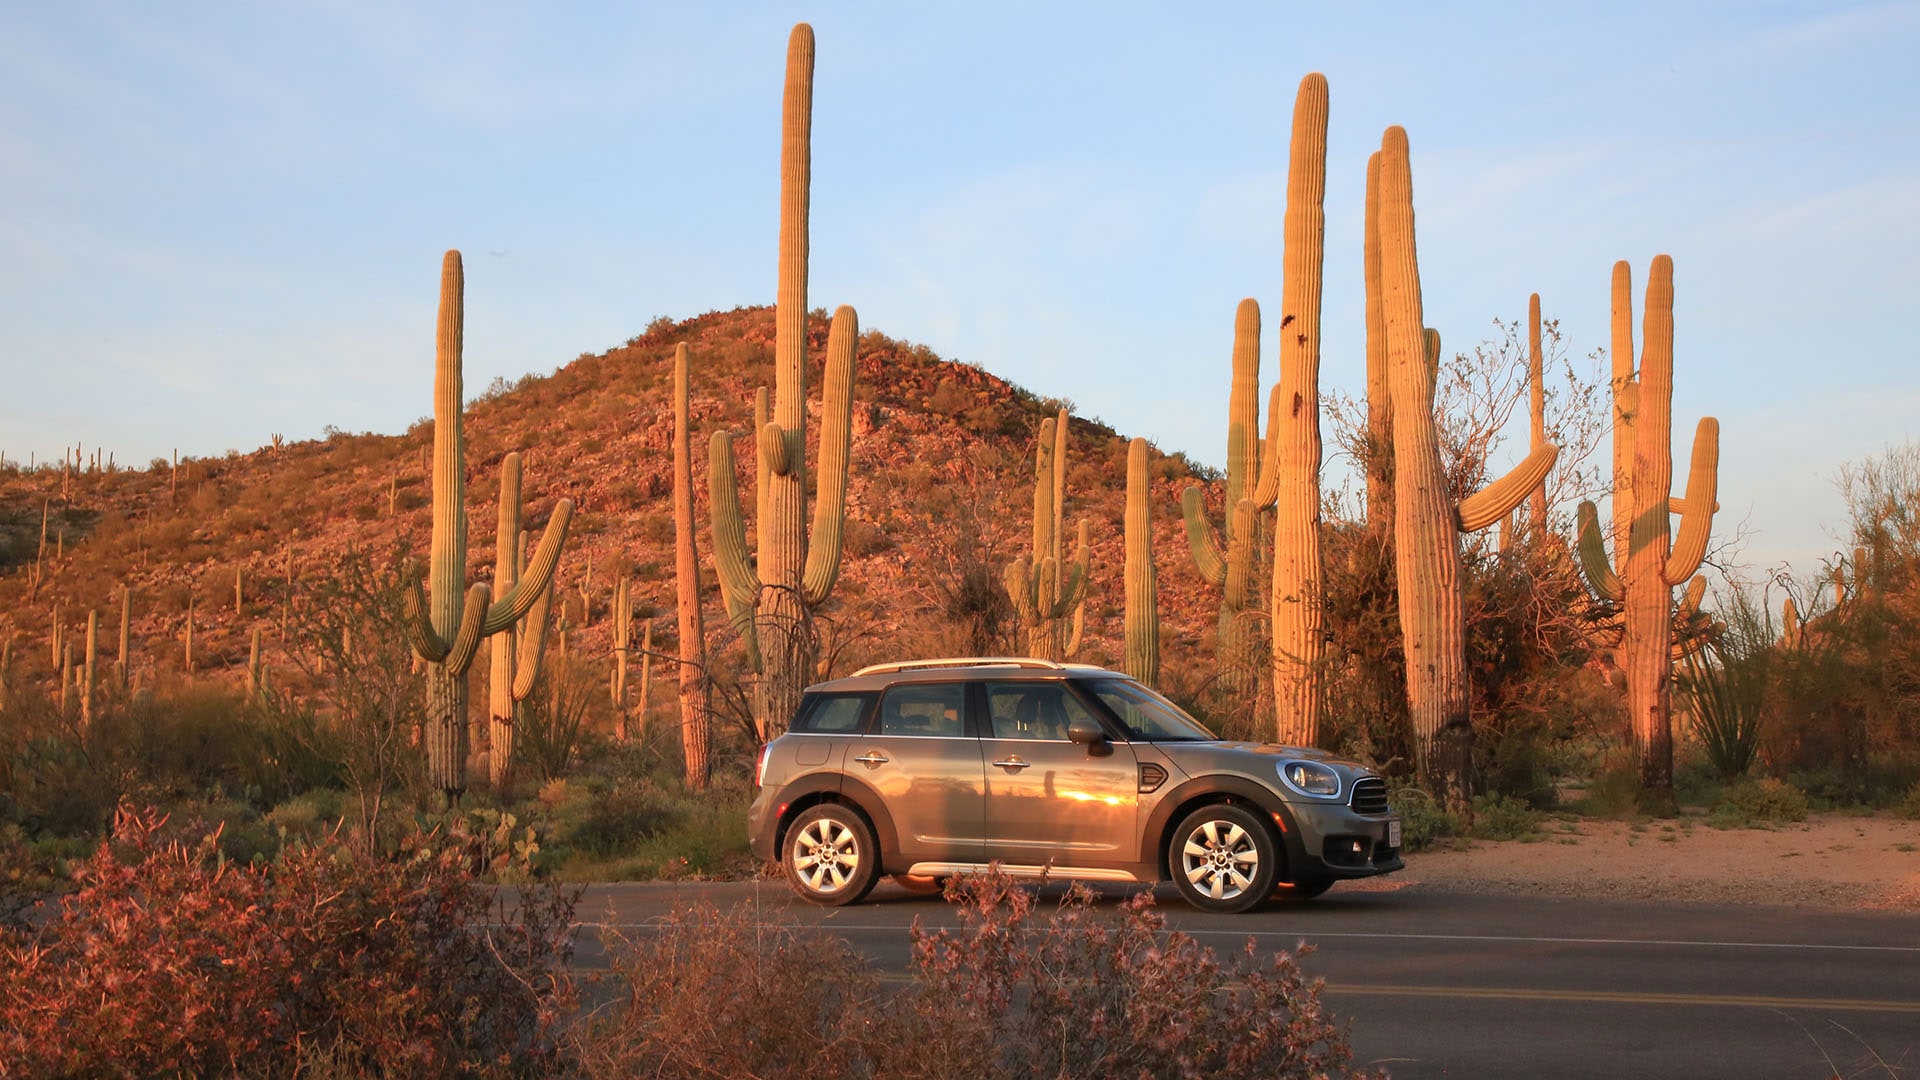 Road Trip to Saguaro National Park